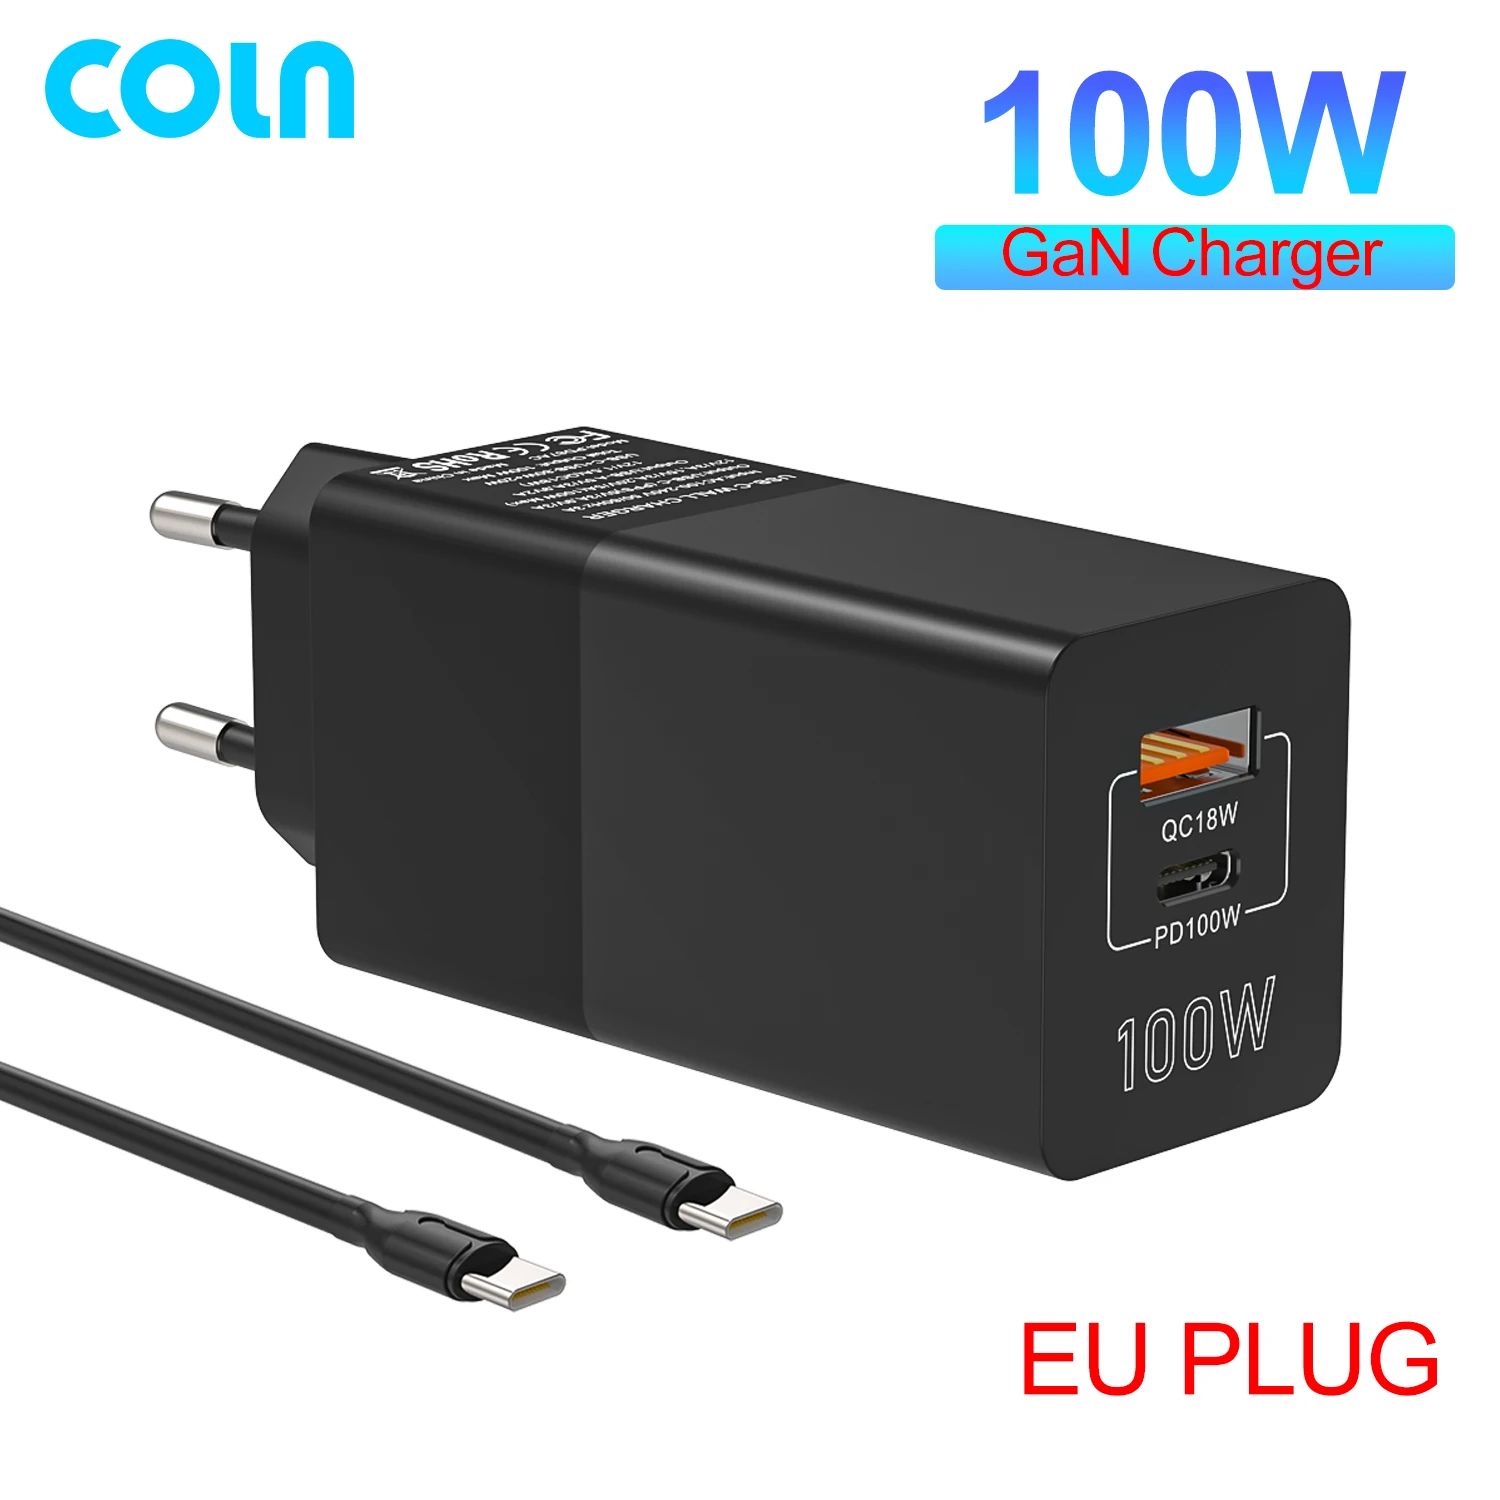 Plugtyp: EU -plugg och kabel (B)